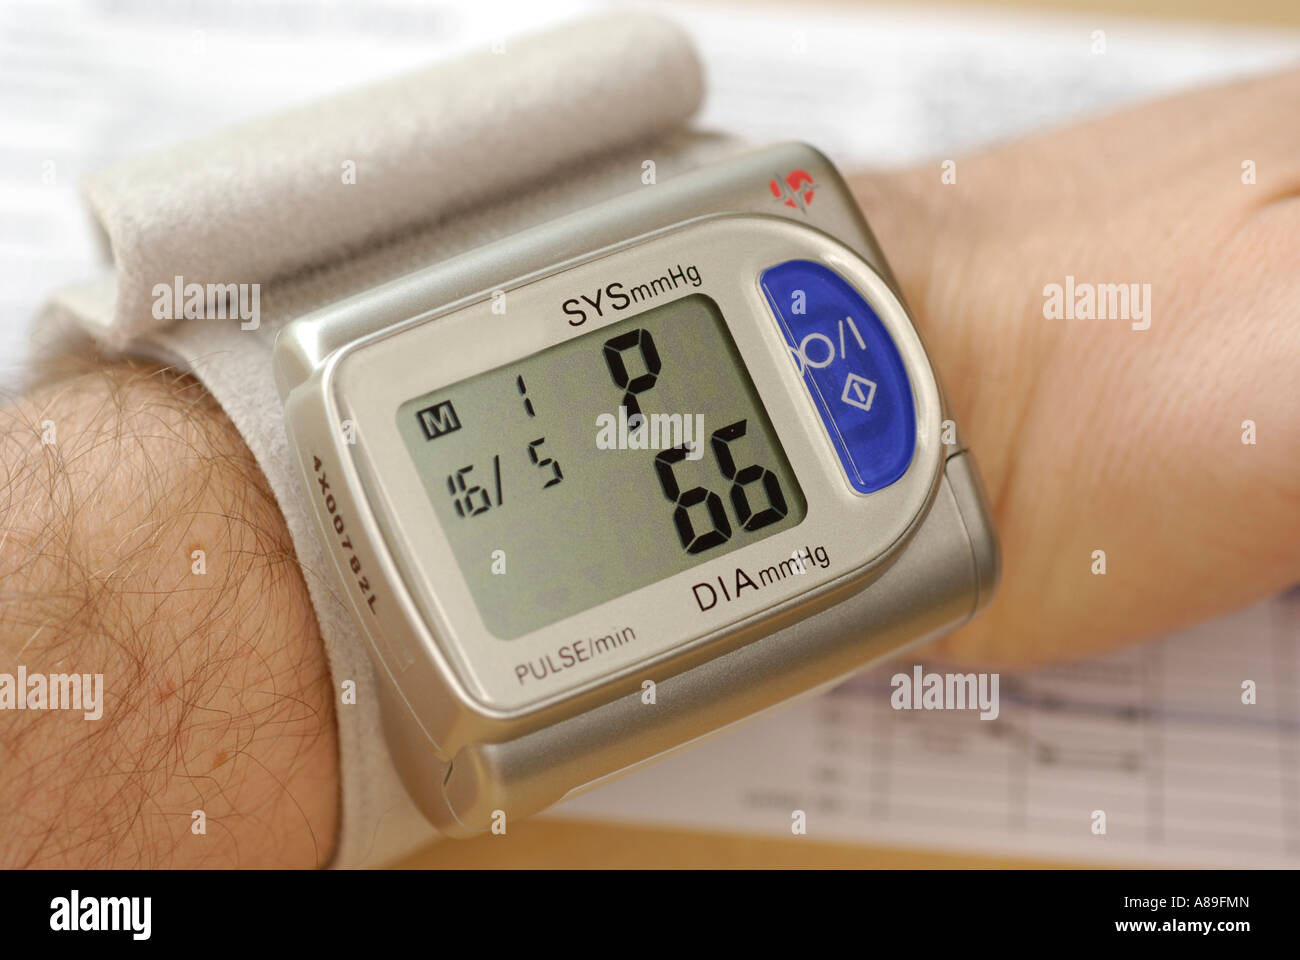 Blood pressure meter on wrist Stock Photo